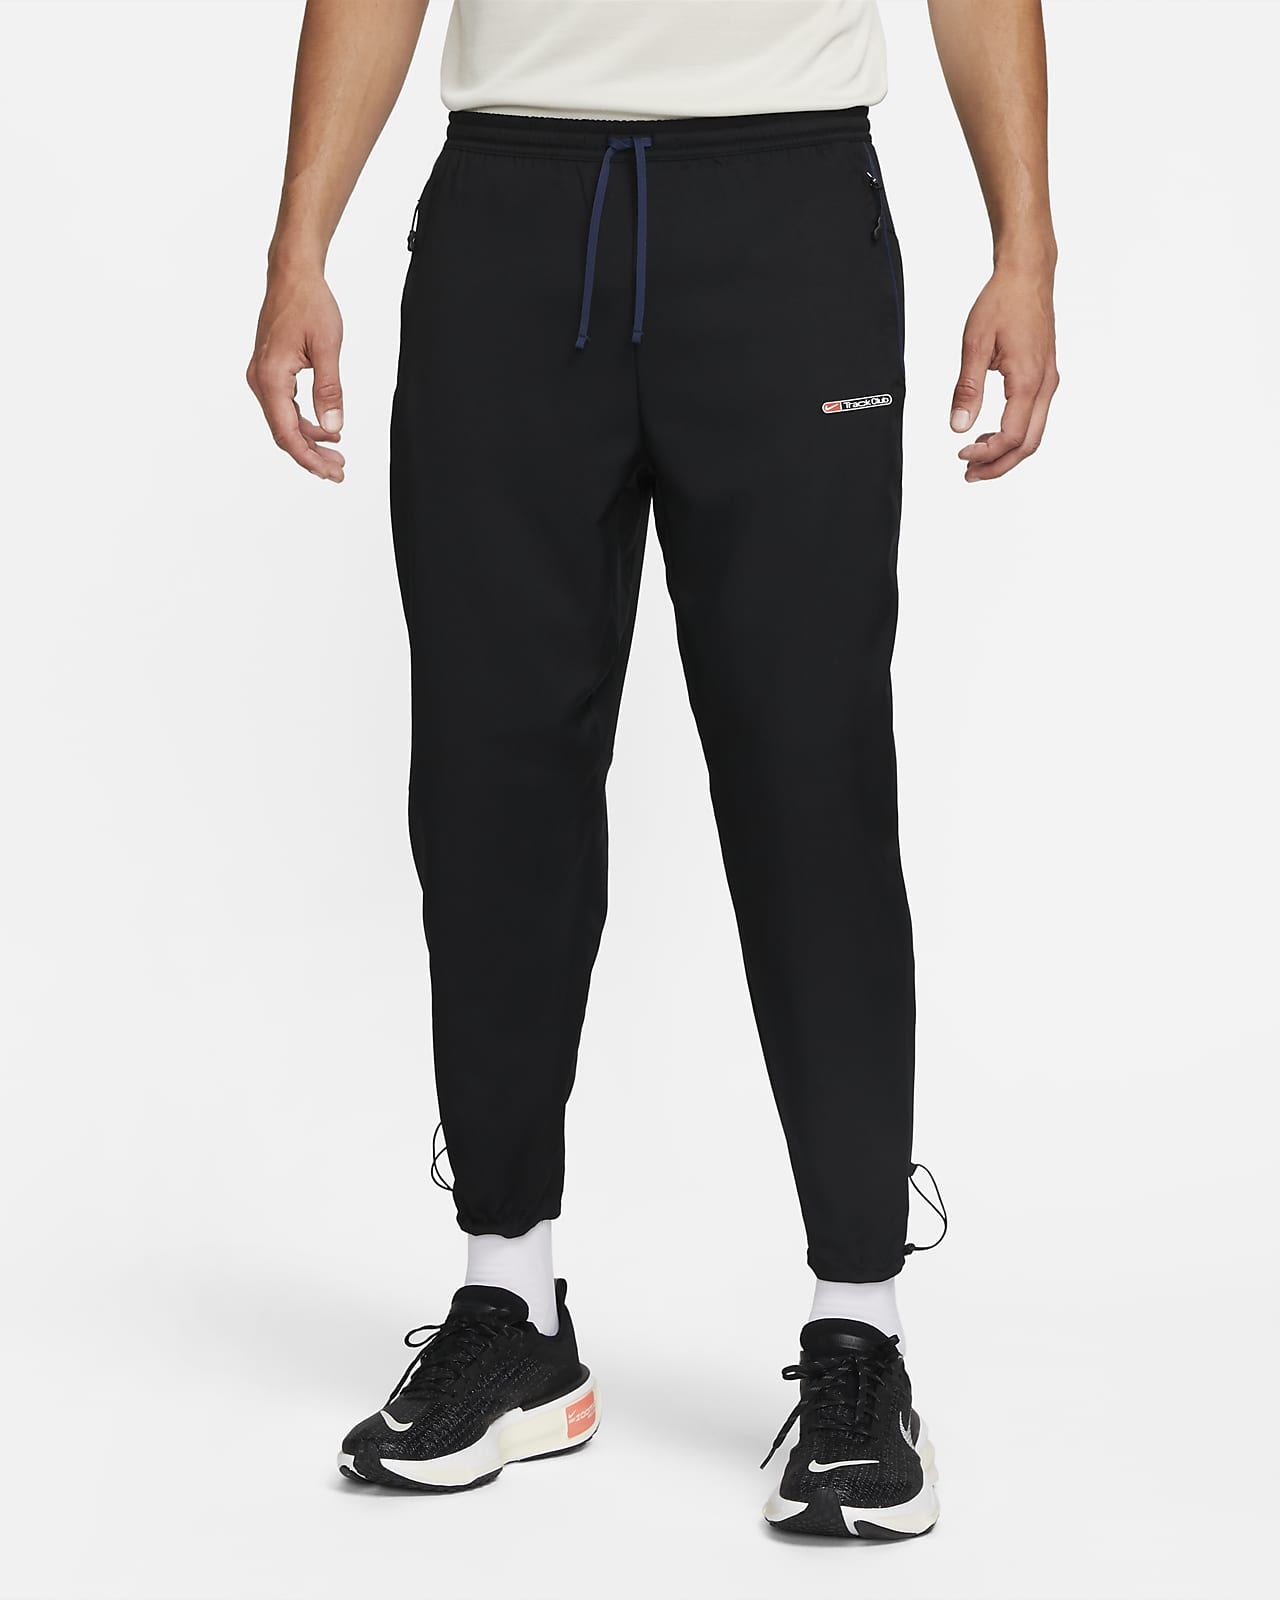 Pants de correr Dri-FIT para hombre Nike Challenger Track Club